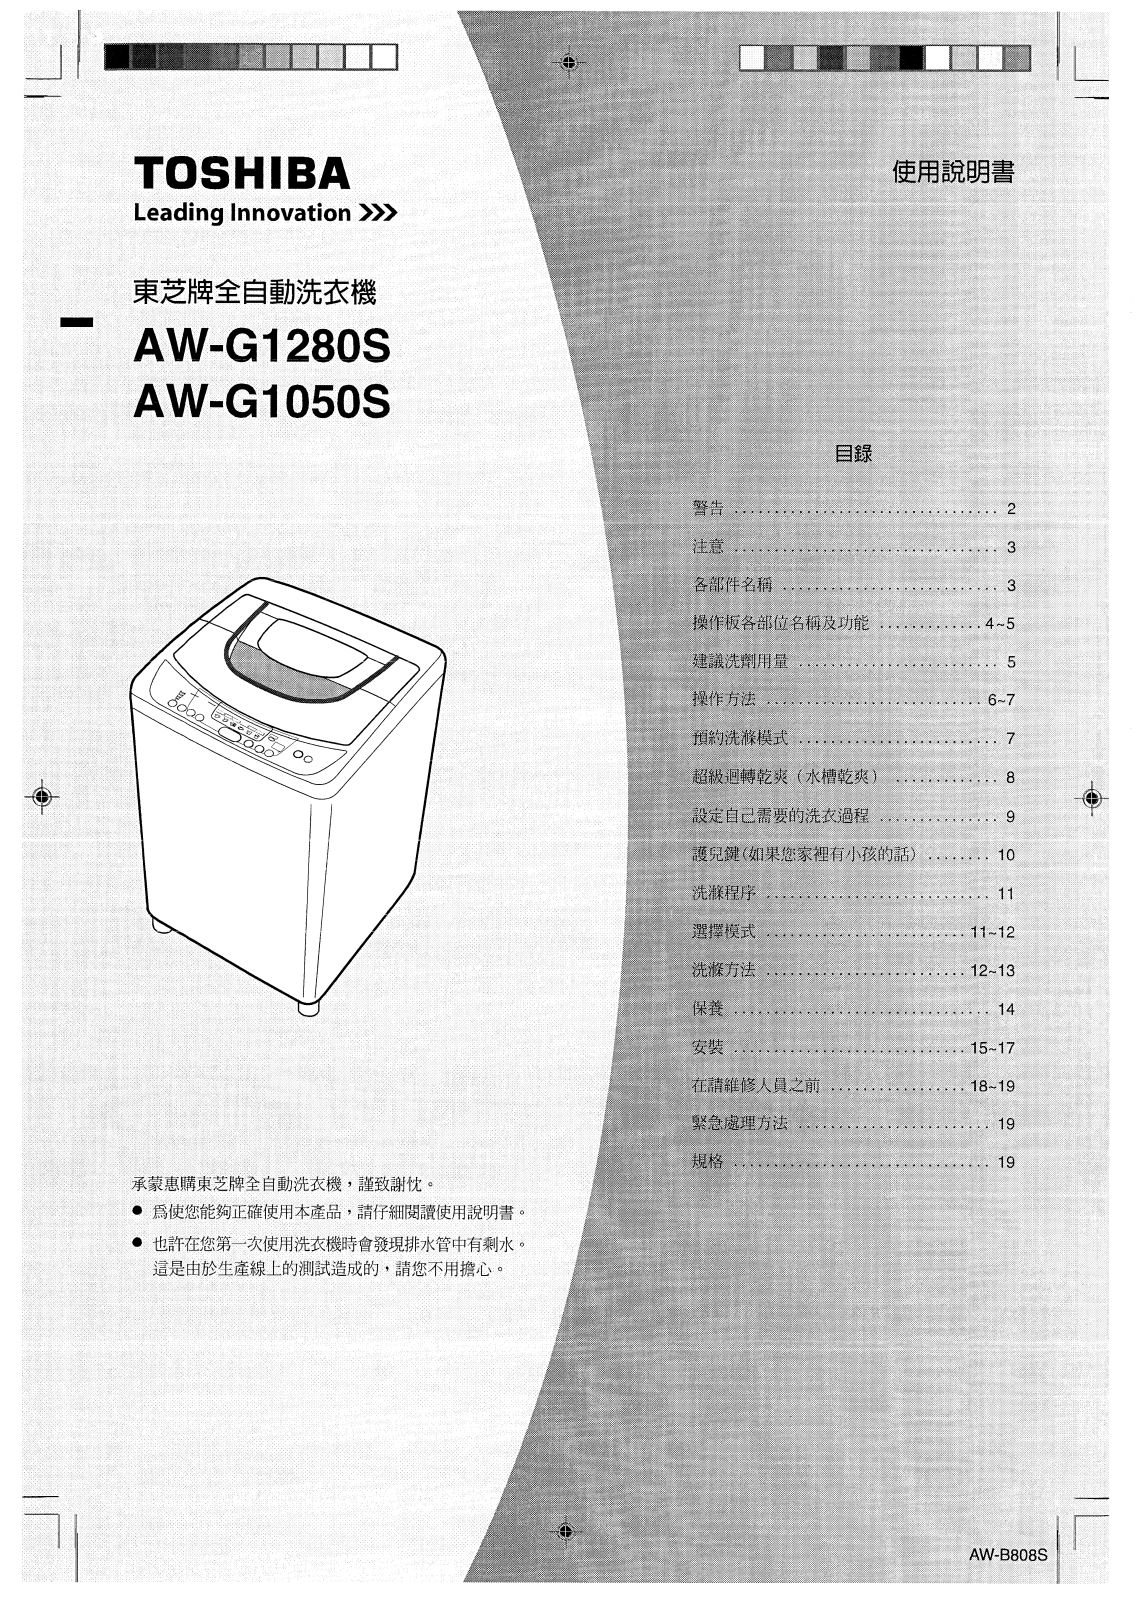 TOSHIBA AW-G1280S, AW-G1050S User Manual